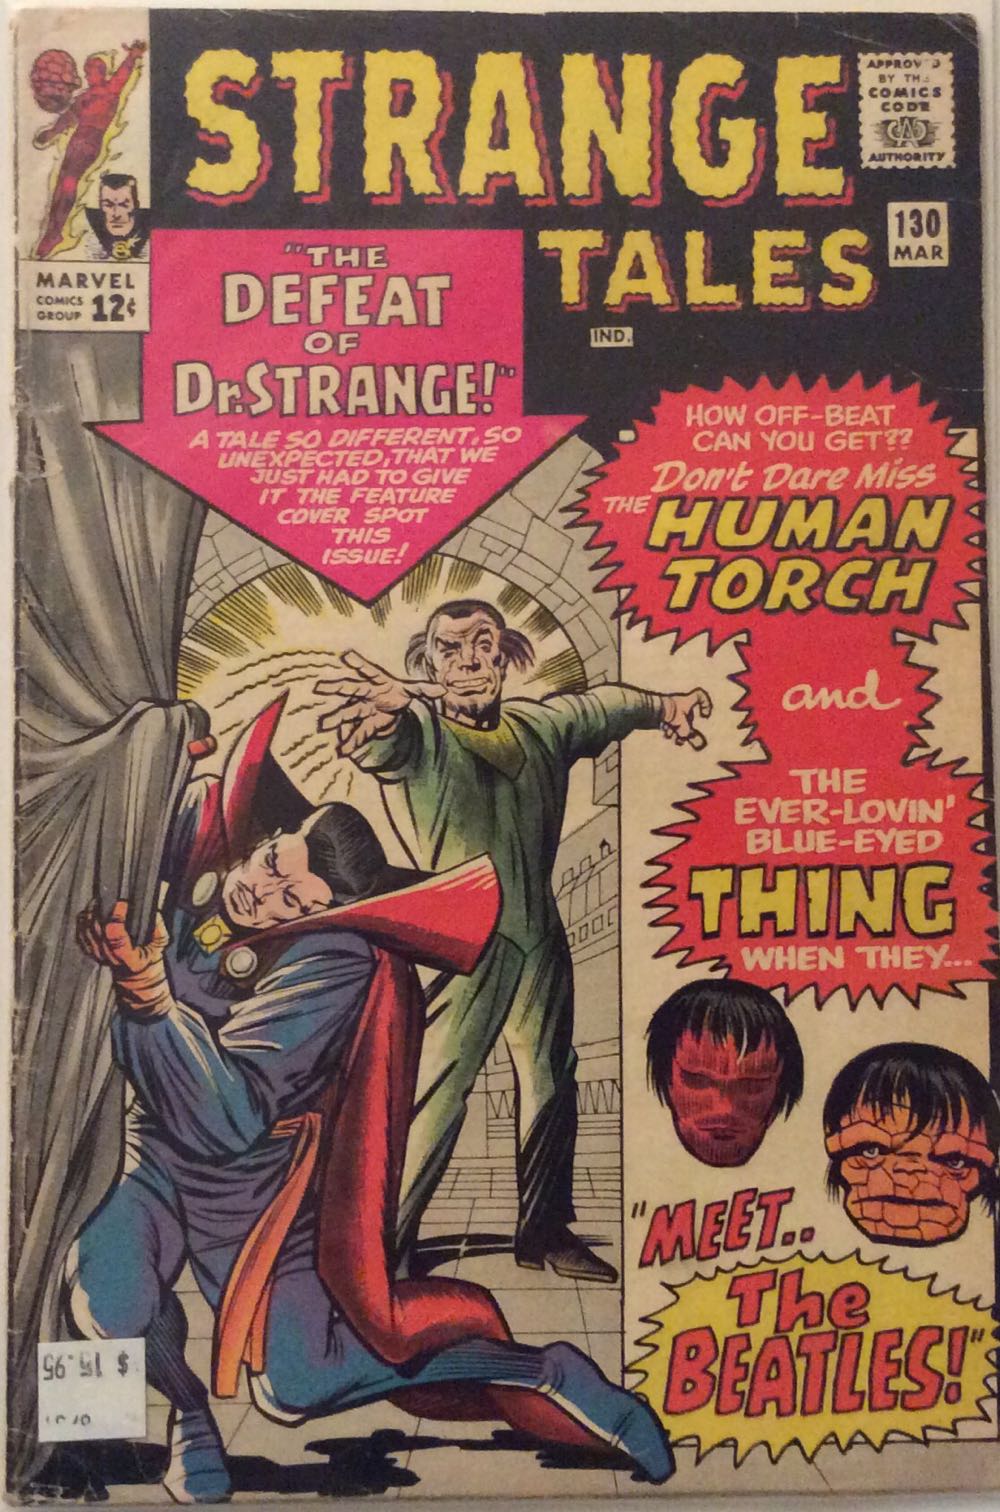 Strange Tales - Marvel Comics (130 - 03/1965) comic book collectible - Main Image 2